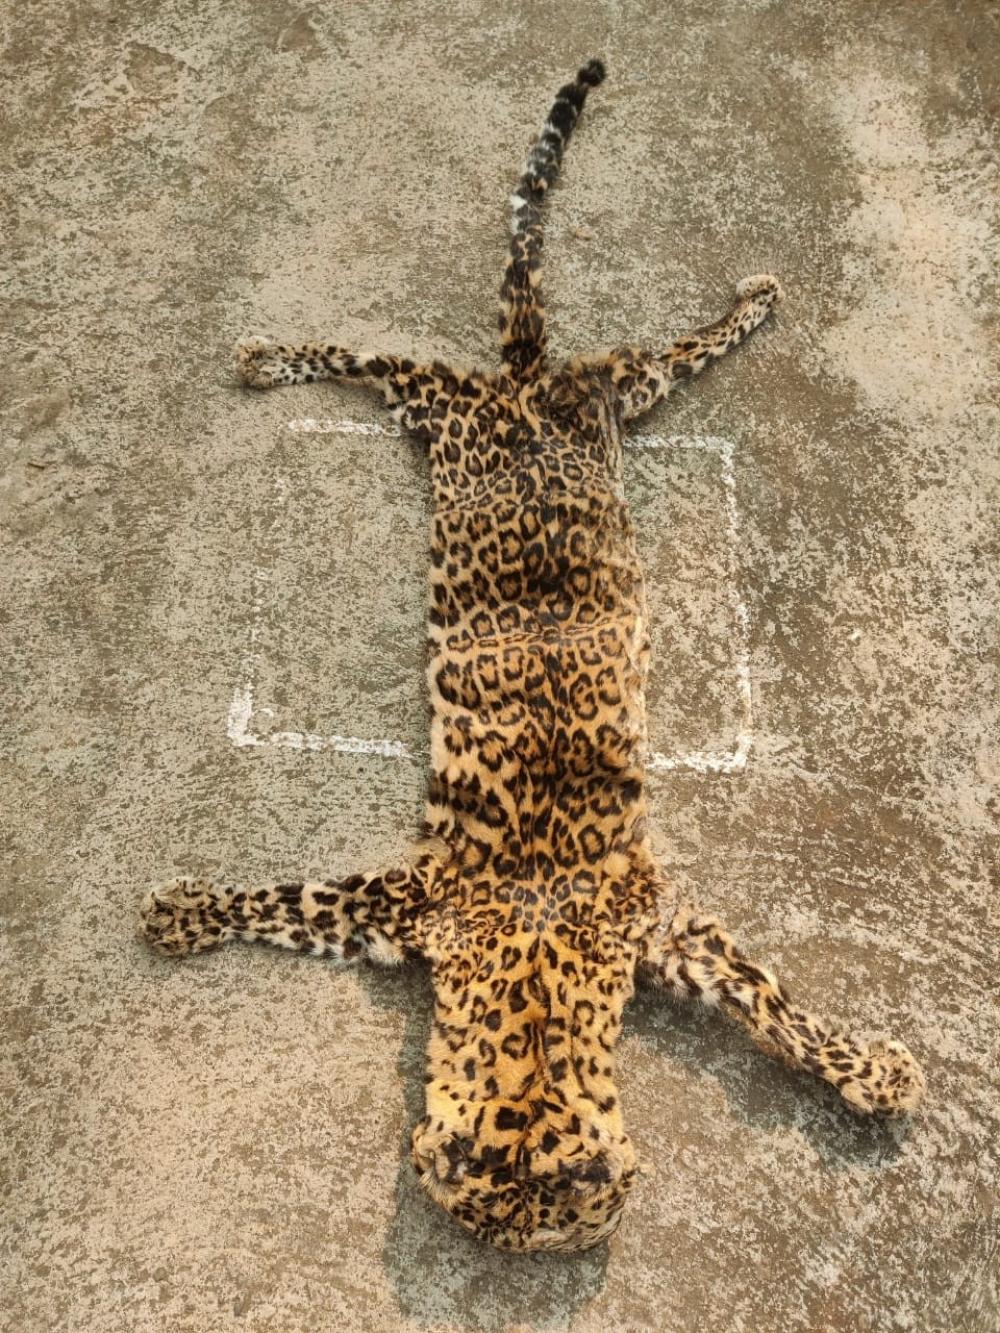 The Weekend Leader - Leopard skin seized, two held in Odisha